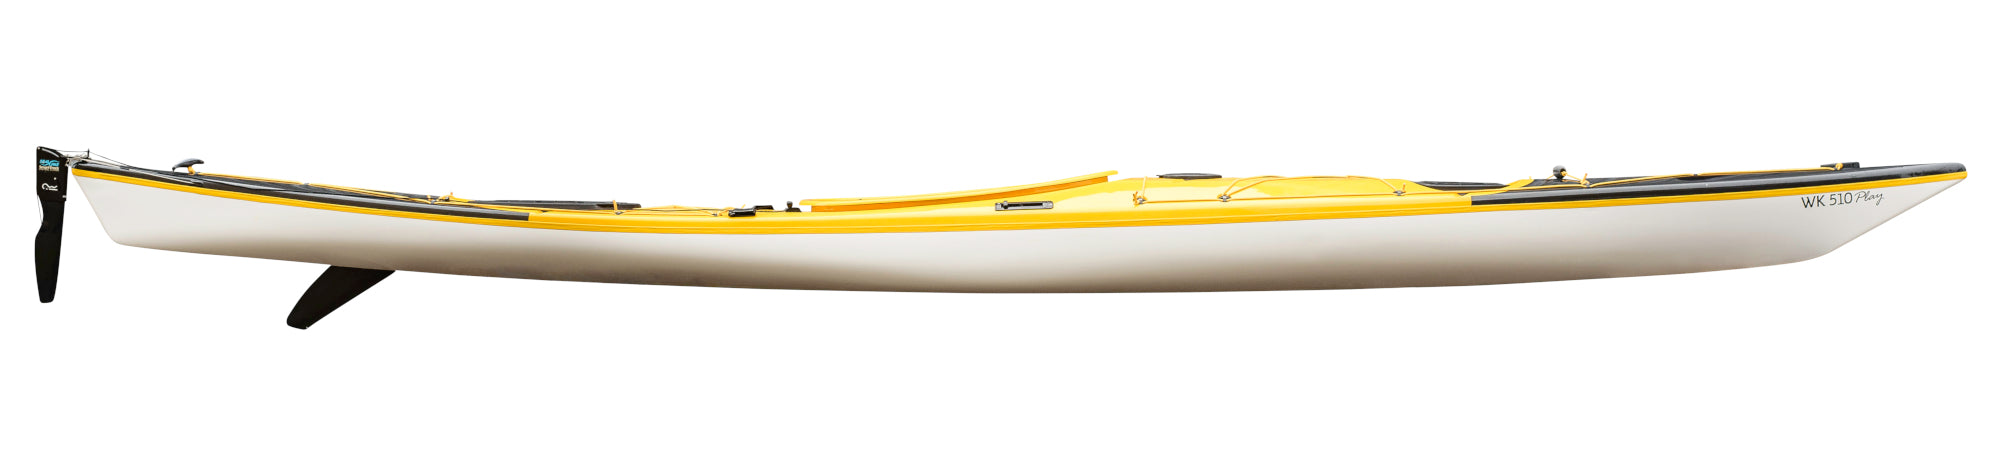 World of Kayaks WK 510